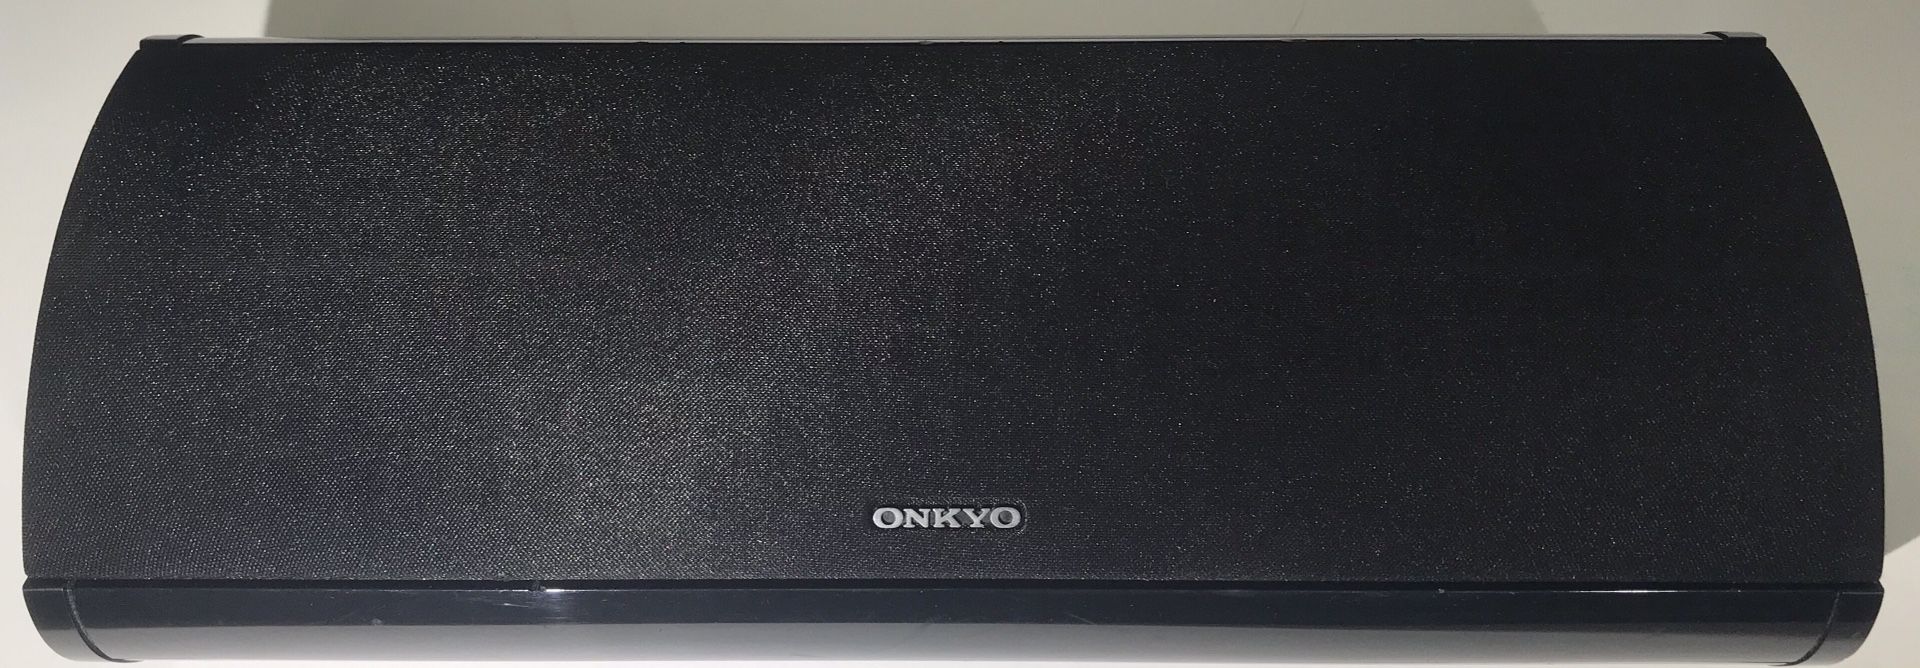 ONKYO SKC-750XC CENTRAL SPEAKER SINGLE